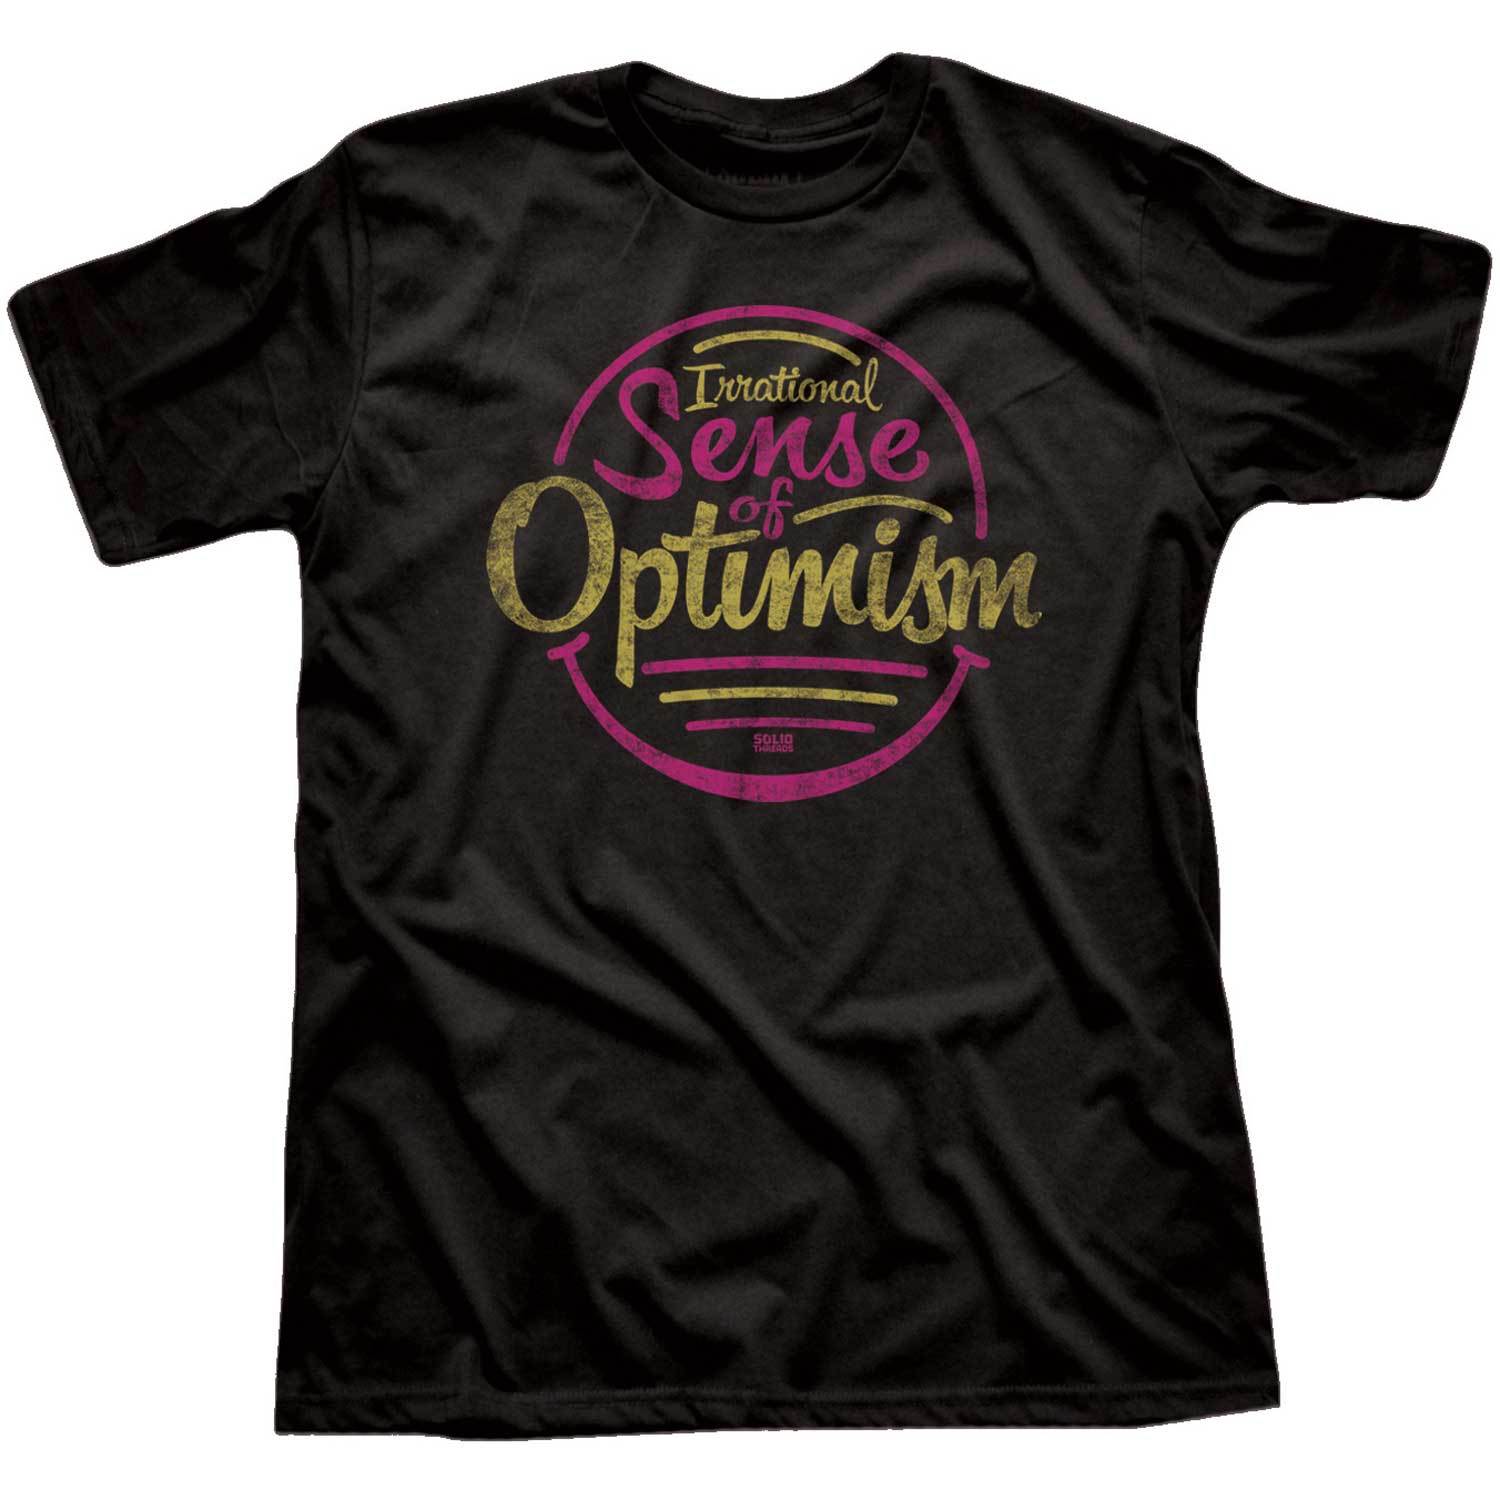 Women's Make America Righteous Graphic T-Shirt